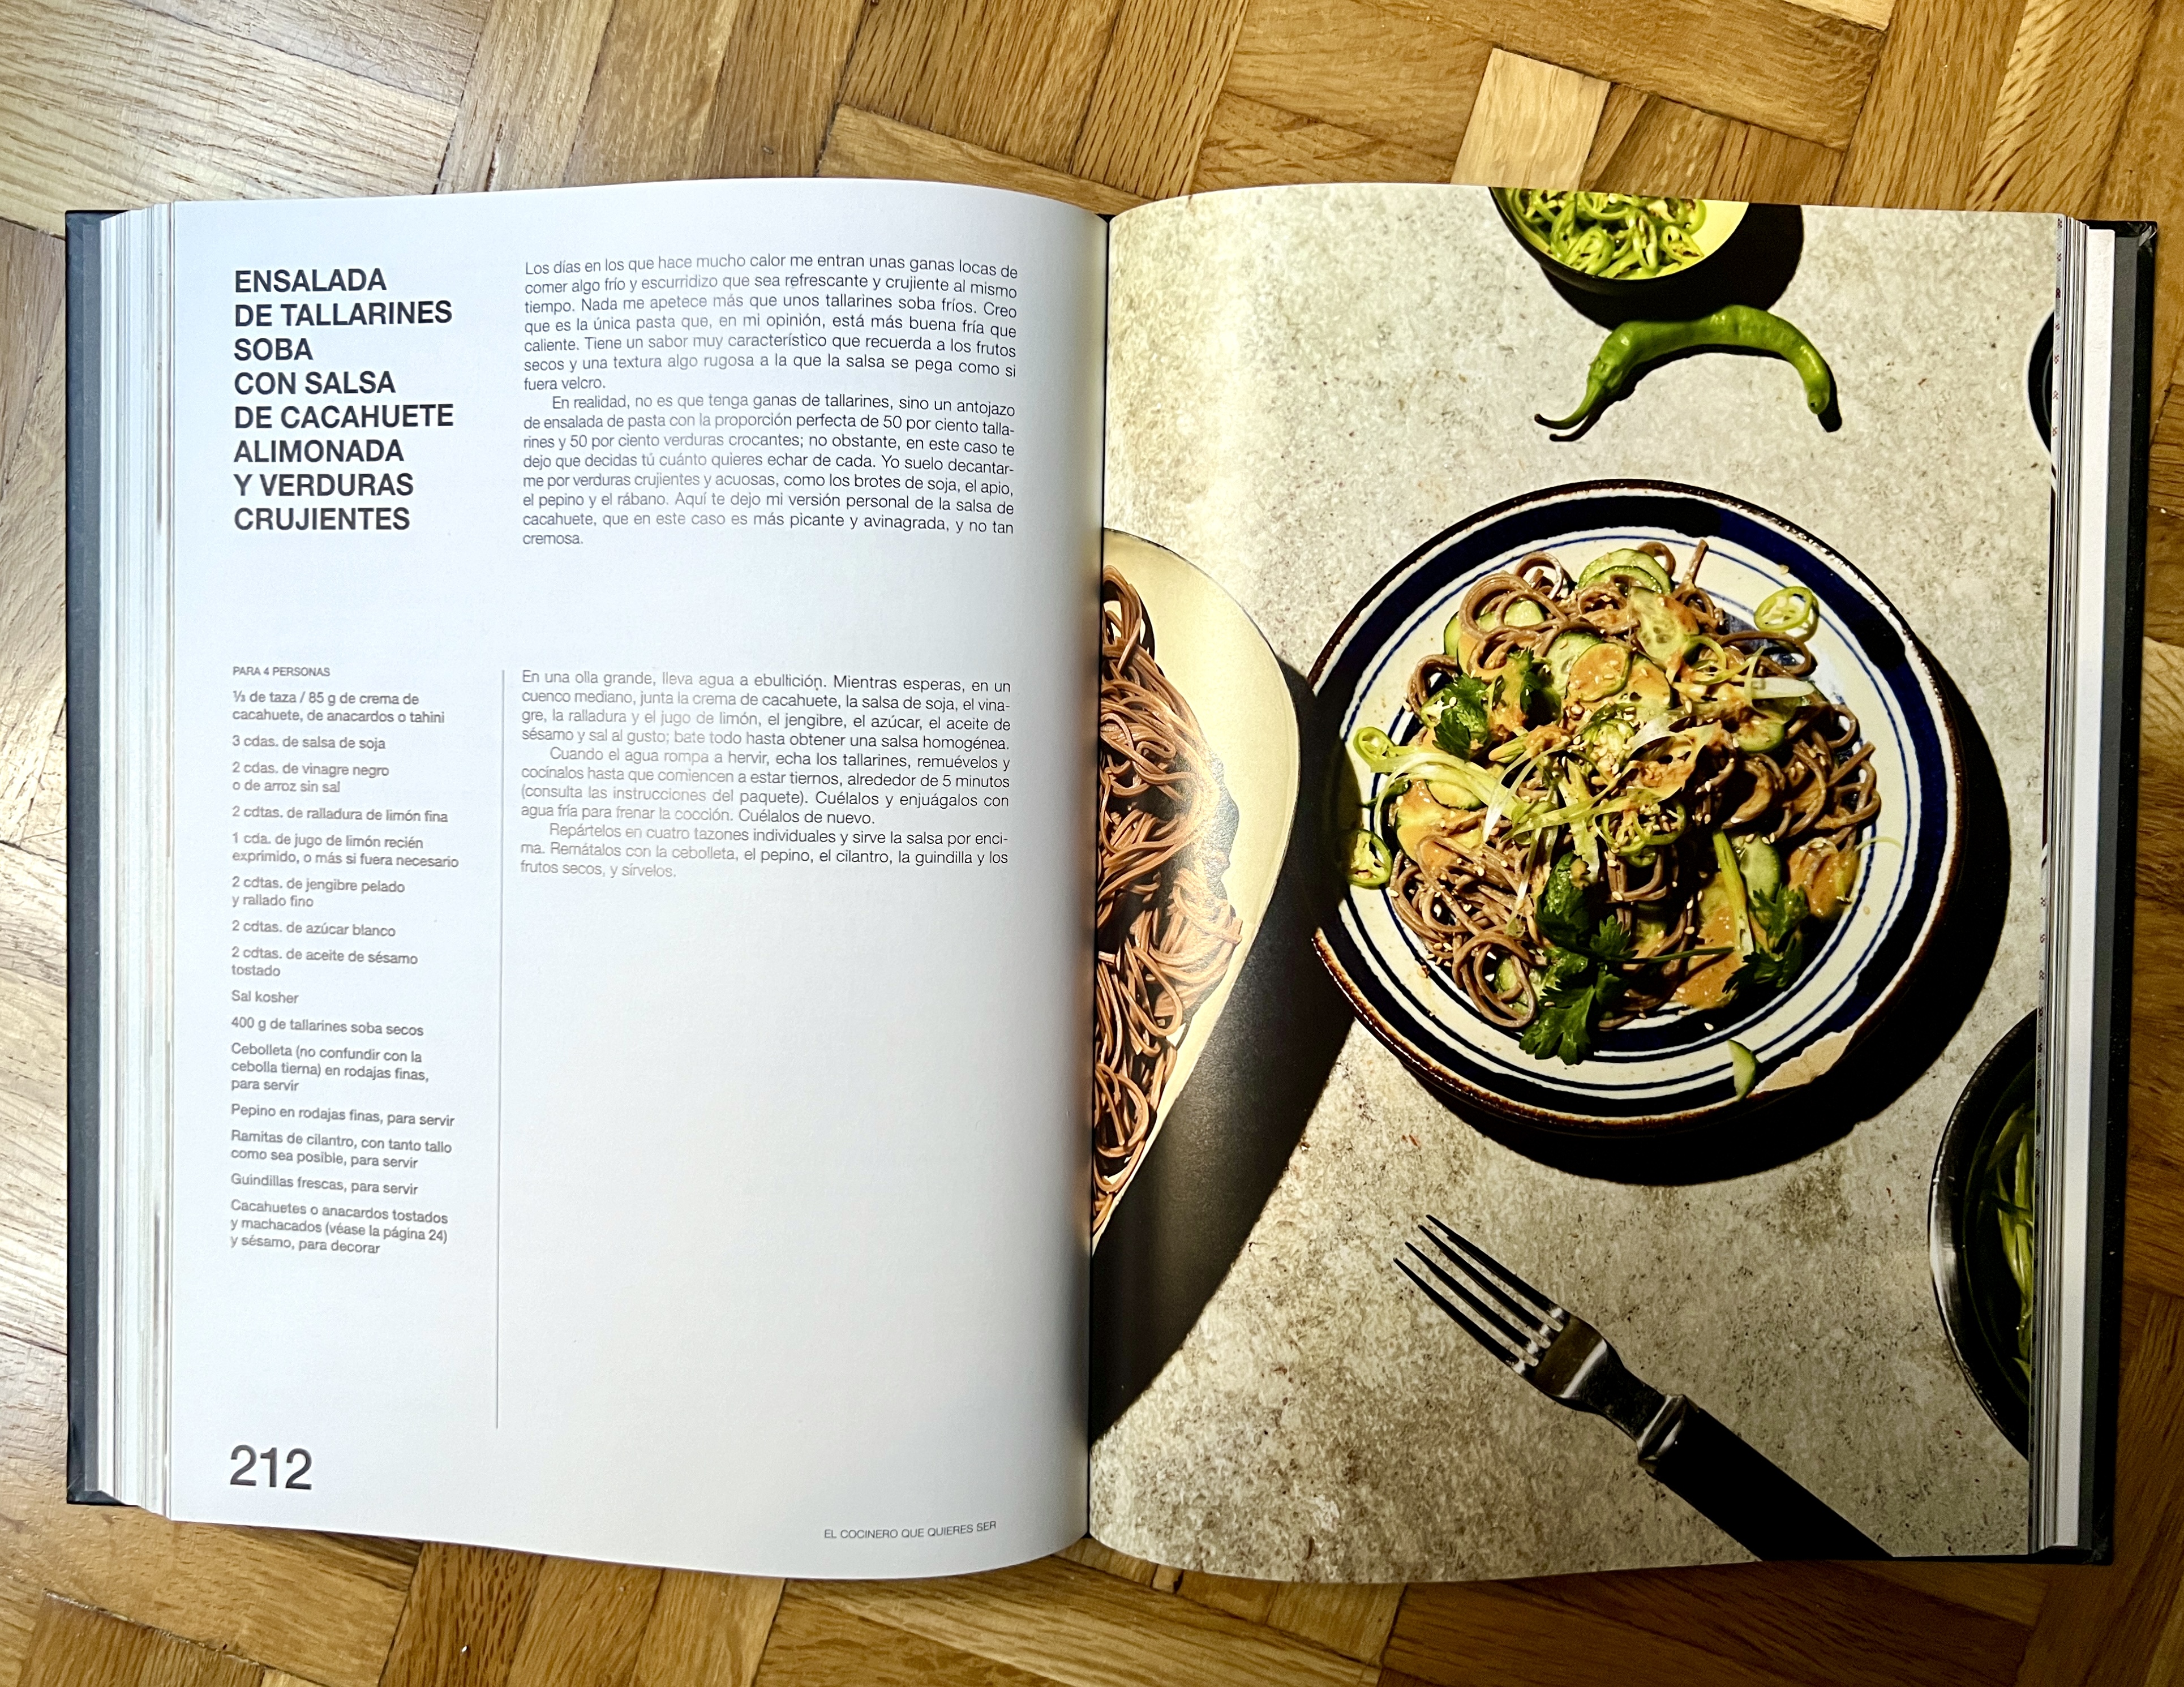 Mi libro de recetas: Libro de recetas en blanco para anotar tus